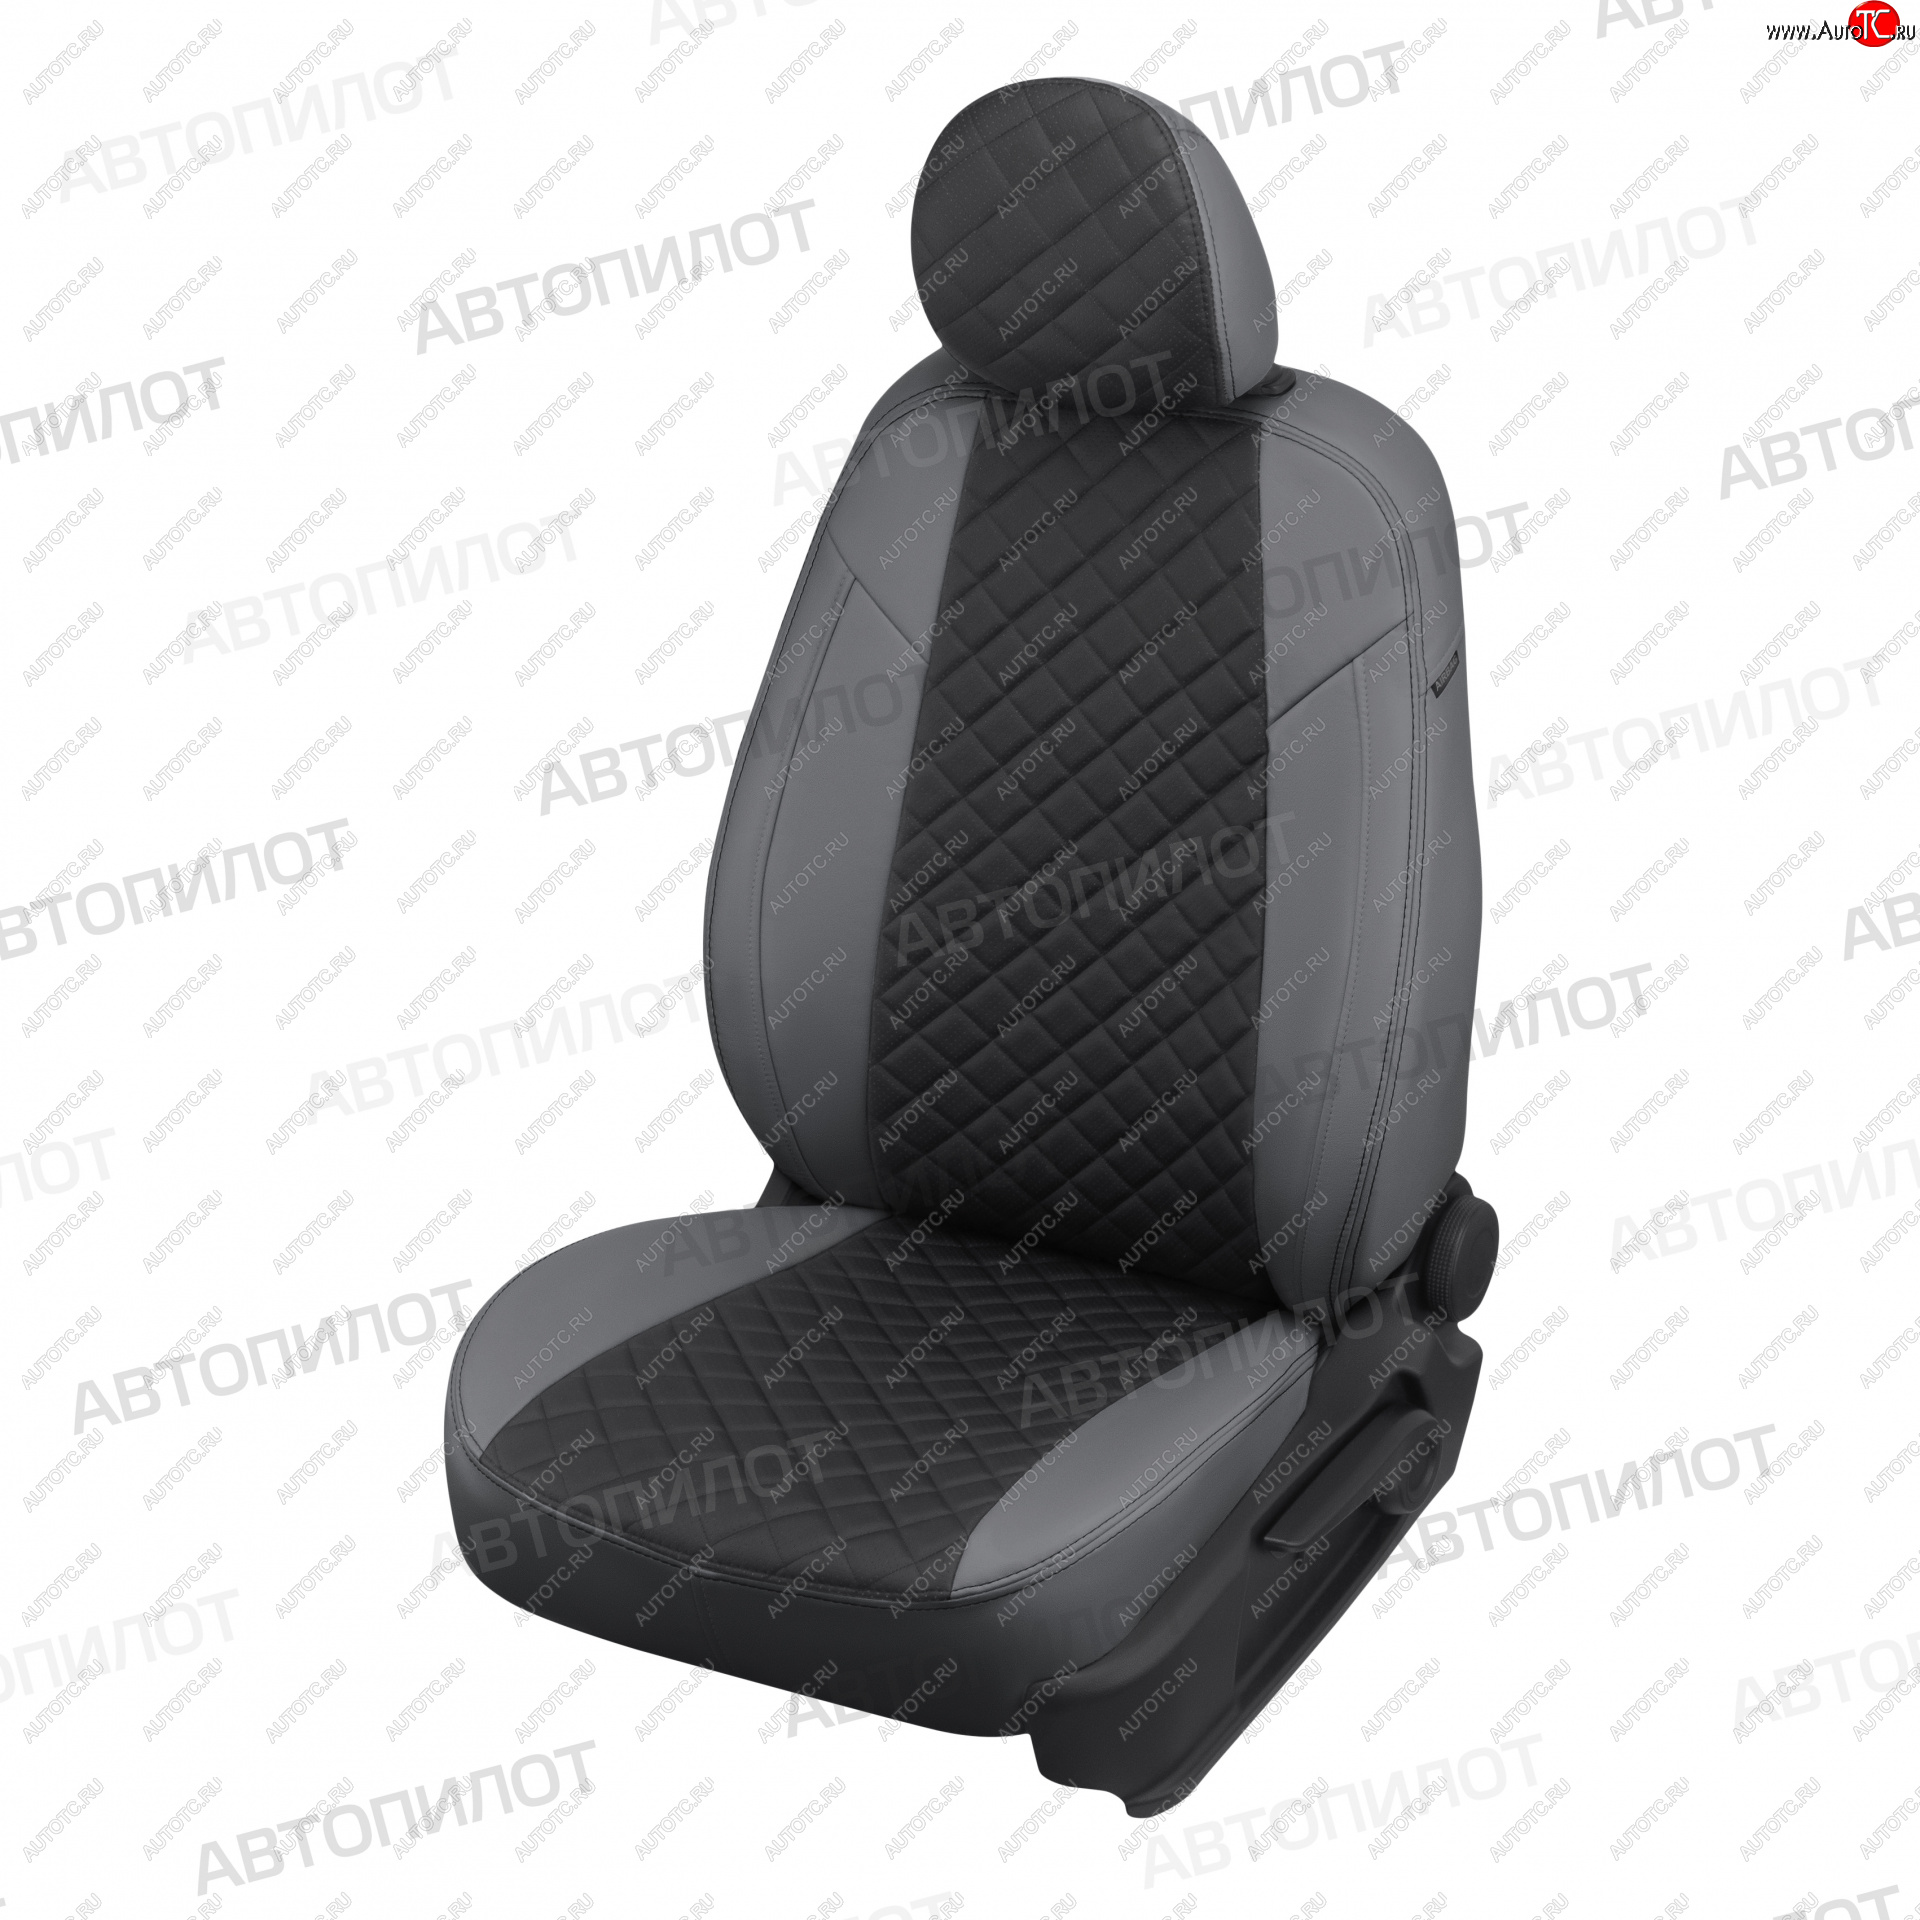 13 999 р. Чехлы сидений (экокожа, Grand 50/50) Автопилот Ромб  KIA Sportage  1 JA (1993-2006) (серый/черный)